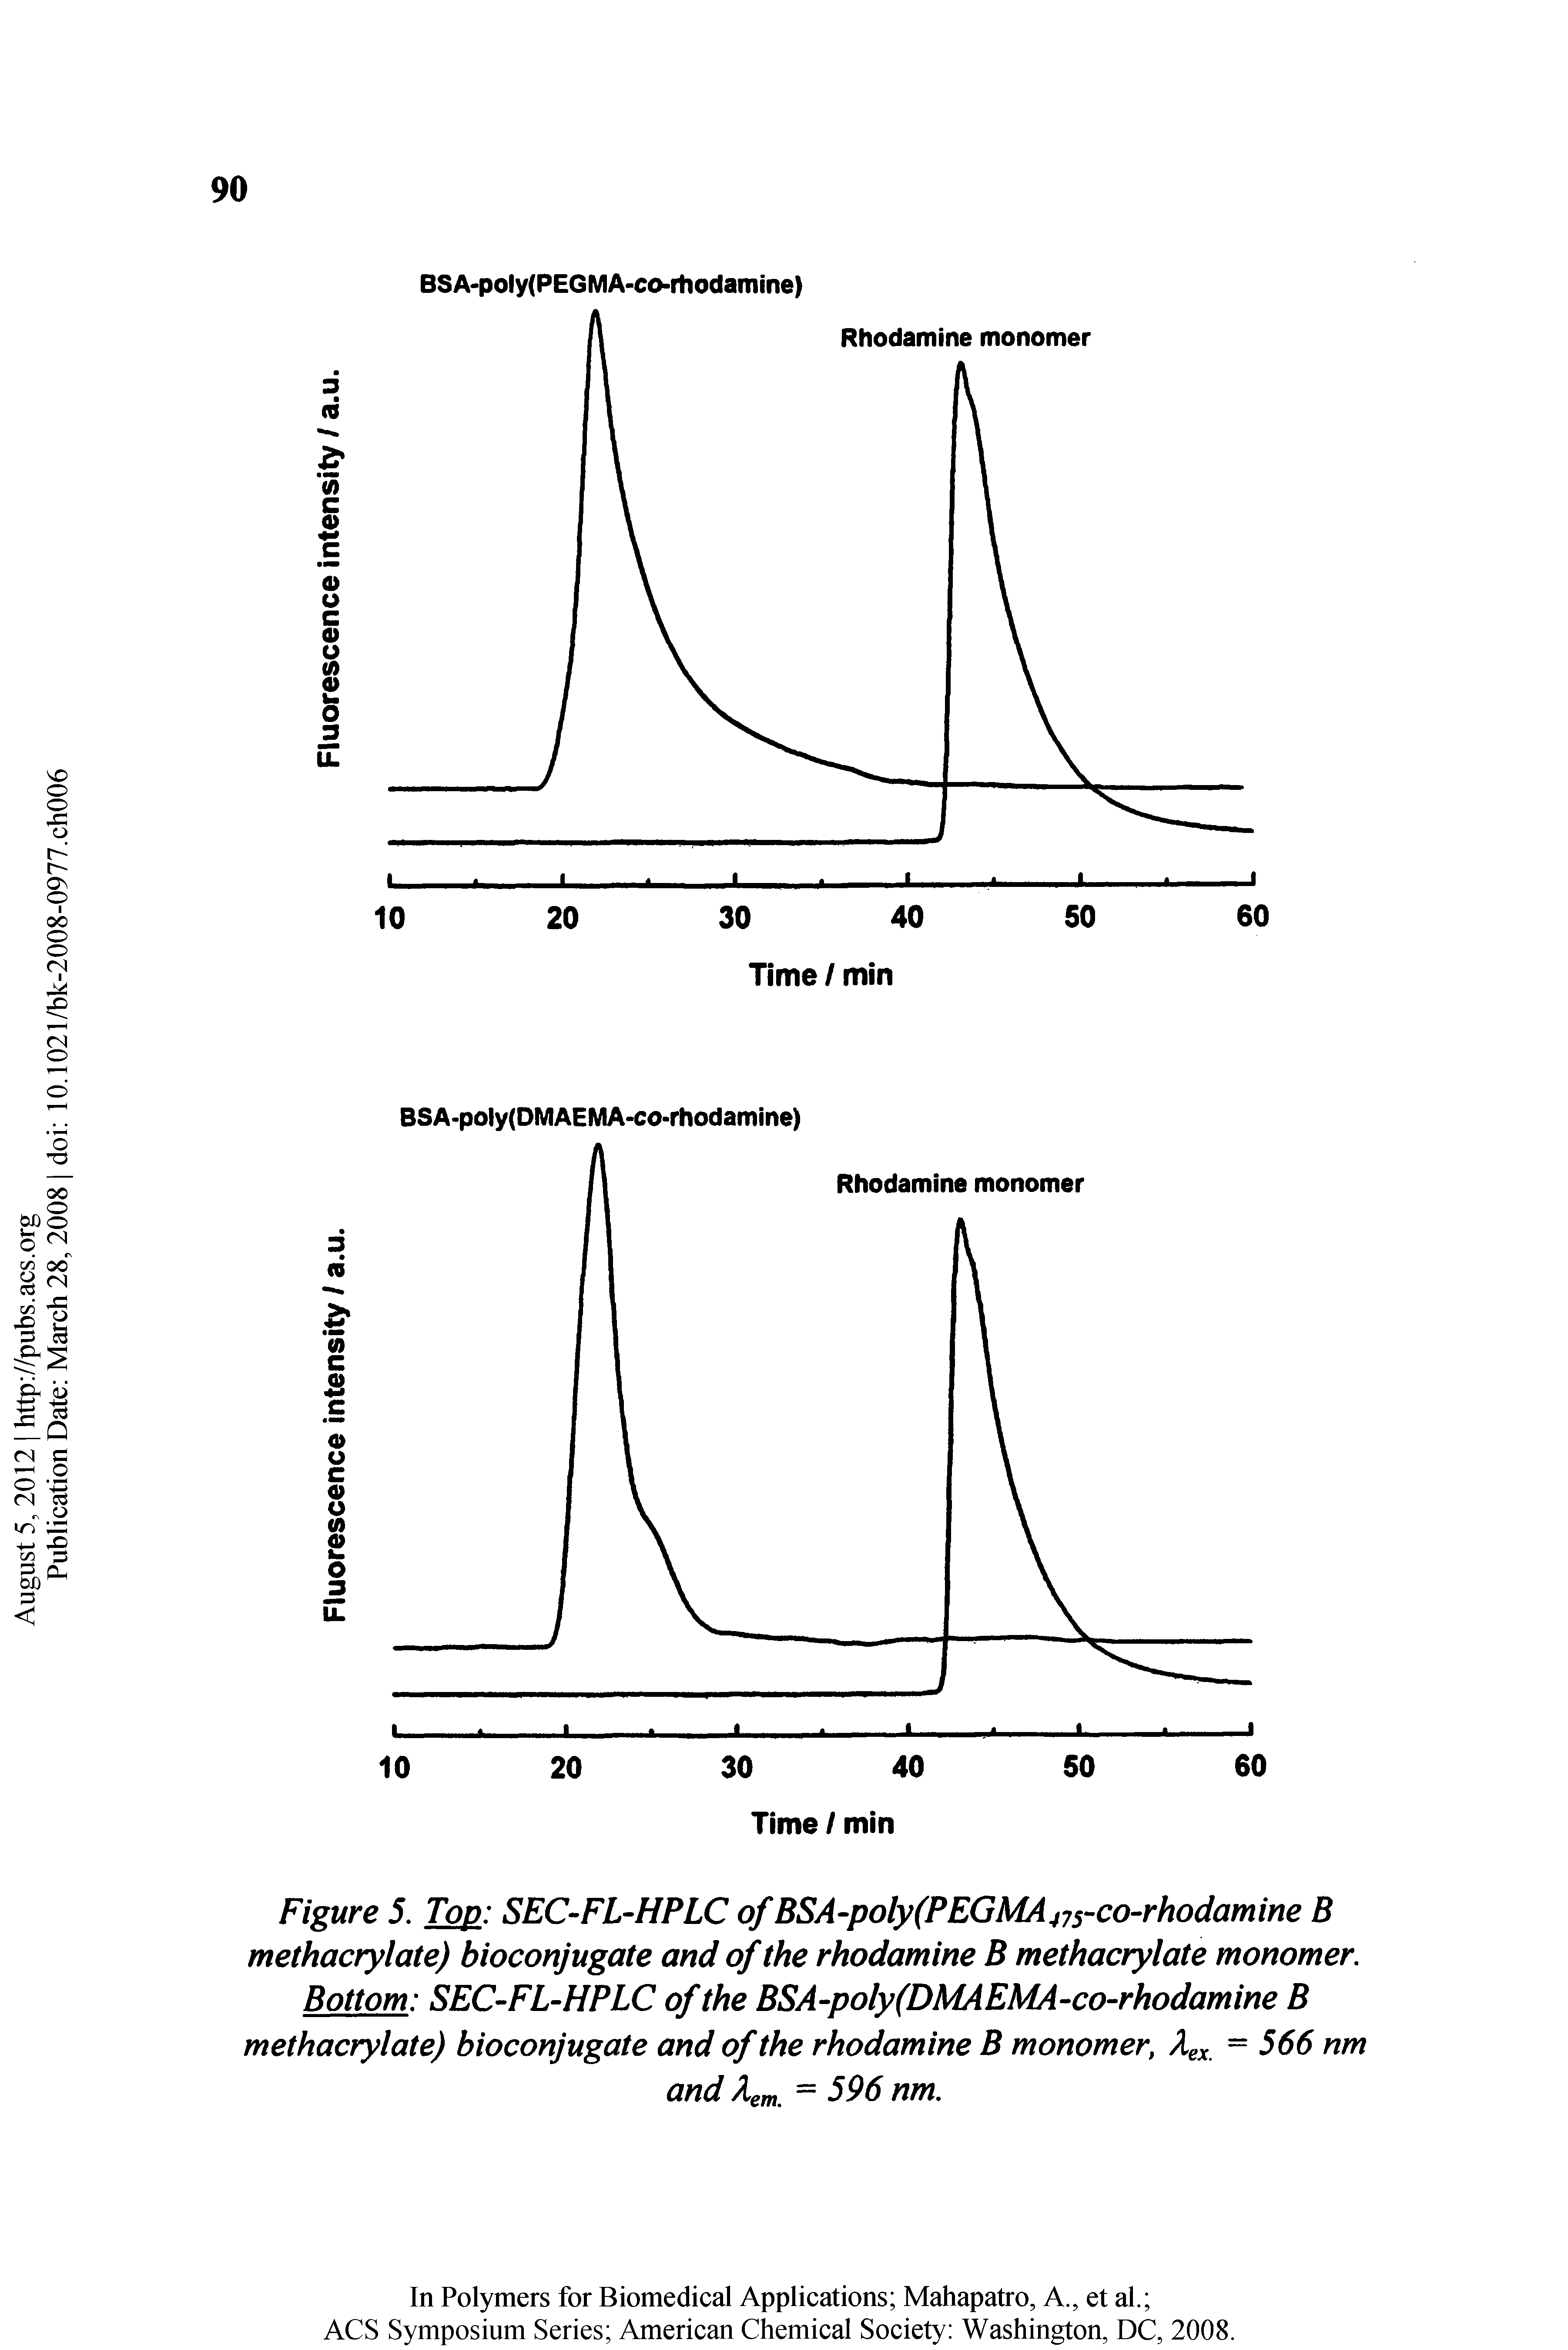 Figure 5. Tog, SEC-FL-HPLC ofBSA poly(PEGMA 75-co-rhodamine B methacrylate) bioconjugate and of the rhodamine B methacrylate monomer.